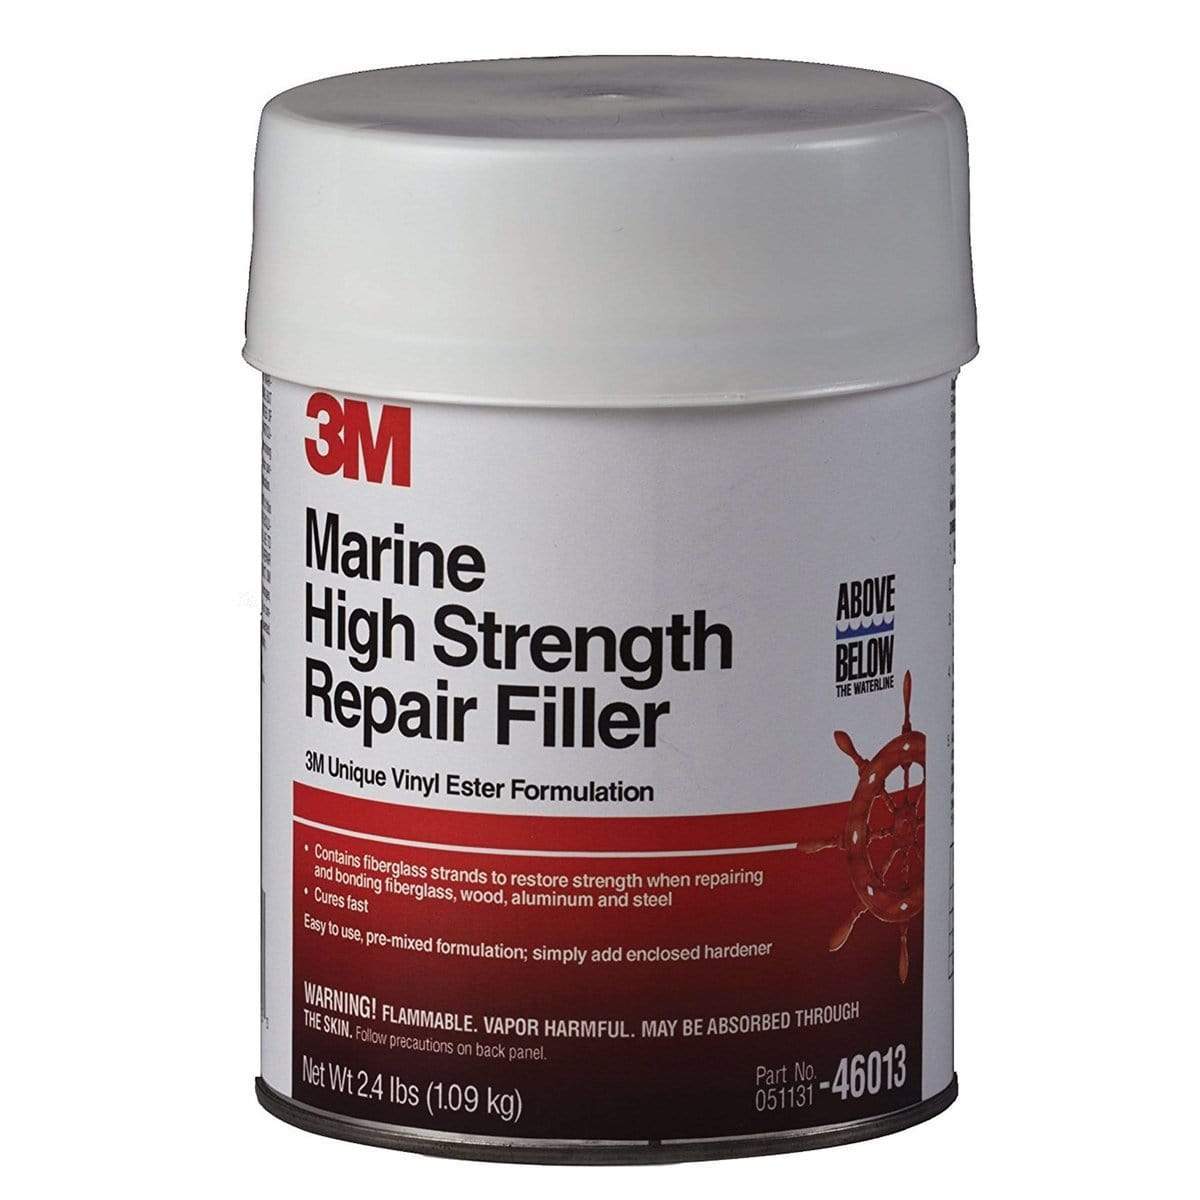 3M Marine Qualifies for Free Shipping 3M Marine High Strength Repair Filler Quart #46013